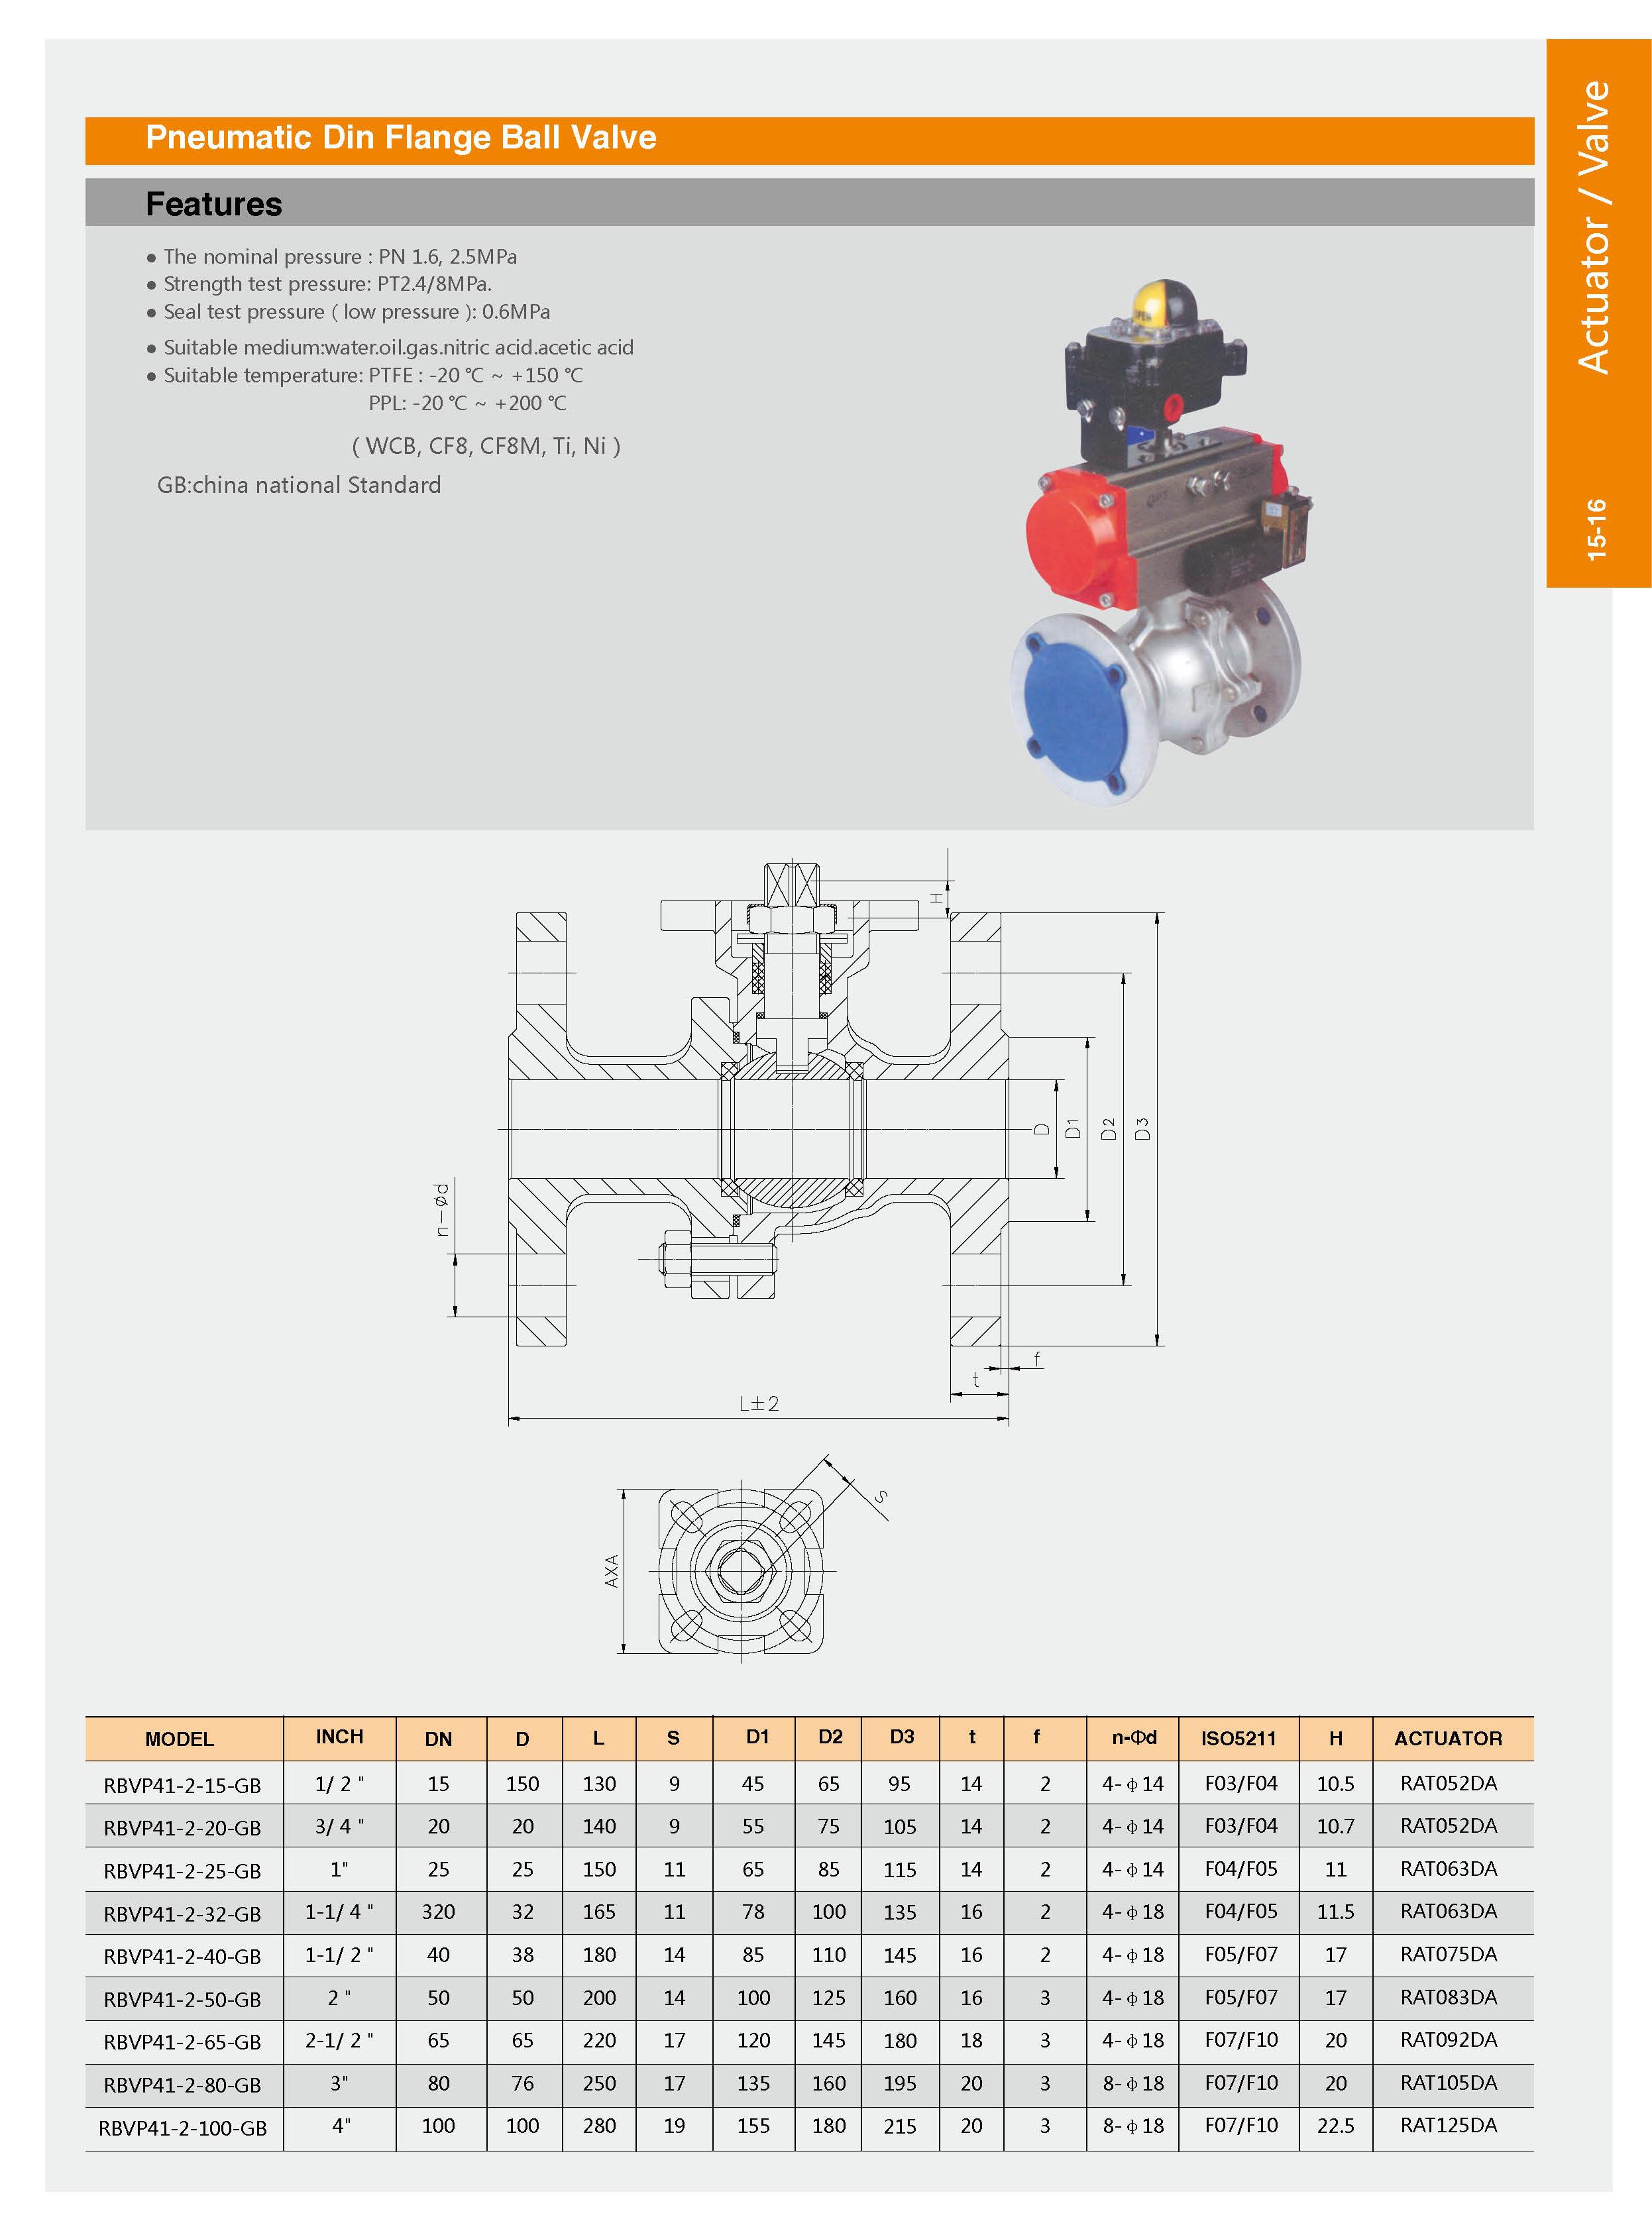 Pneumatic Ball valve RBV series Flange